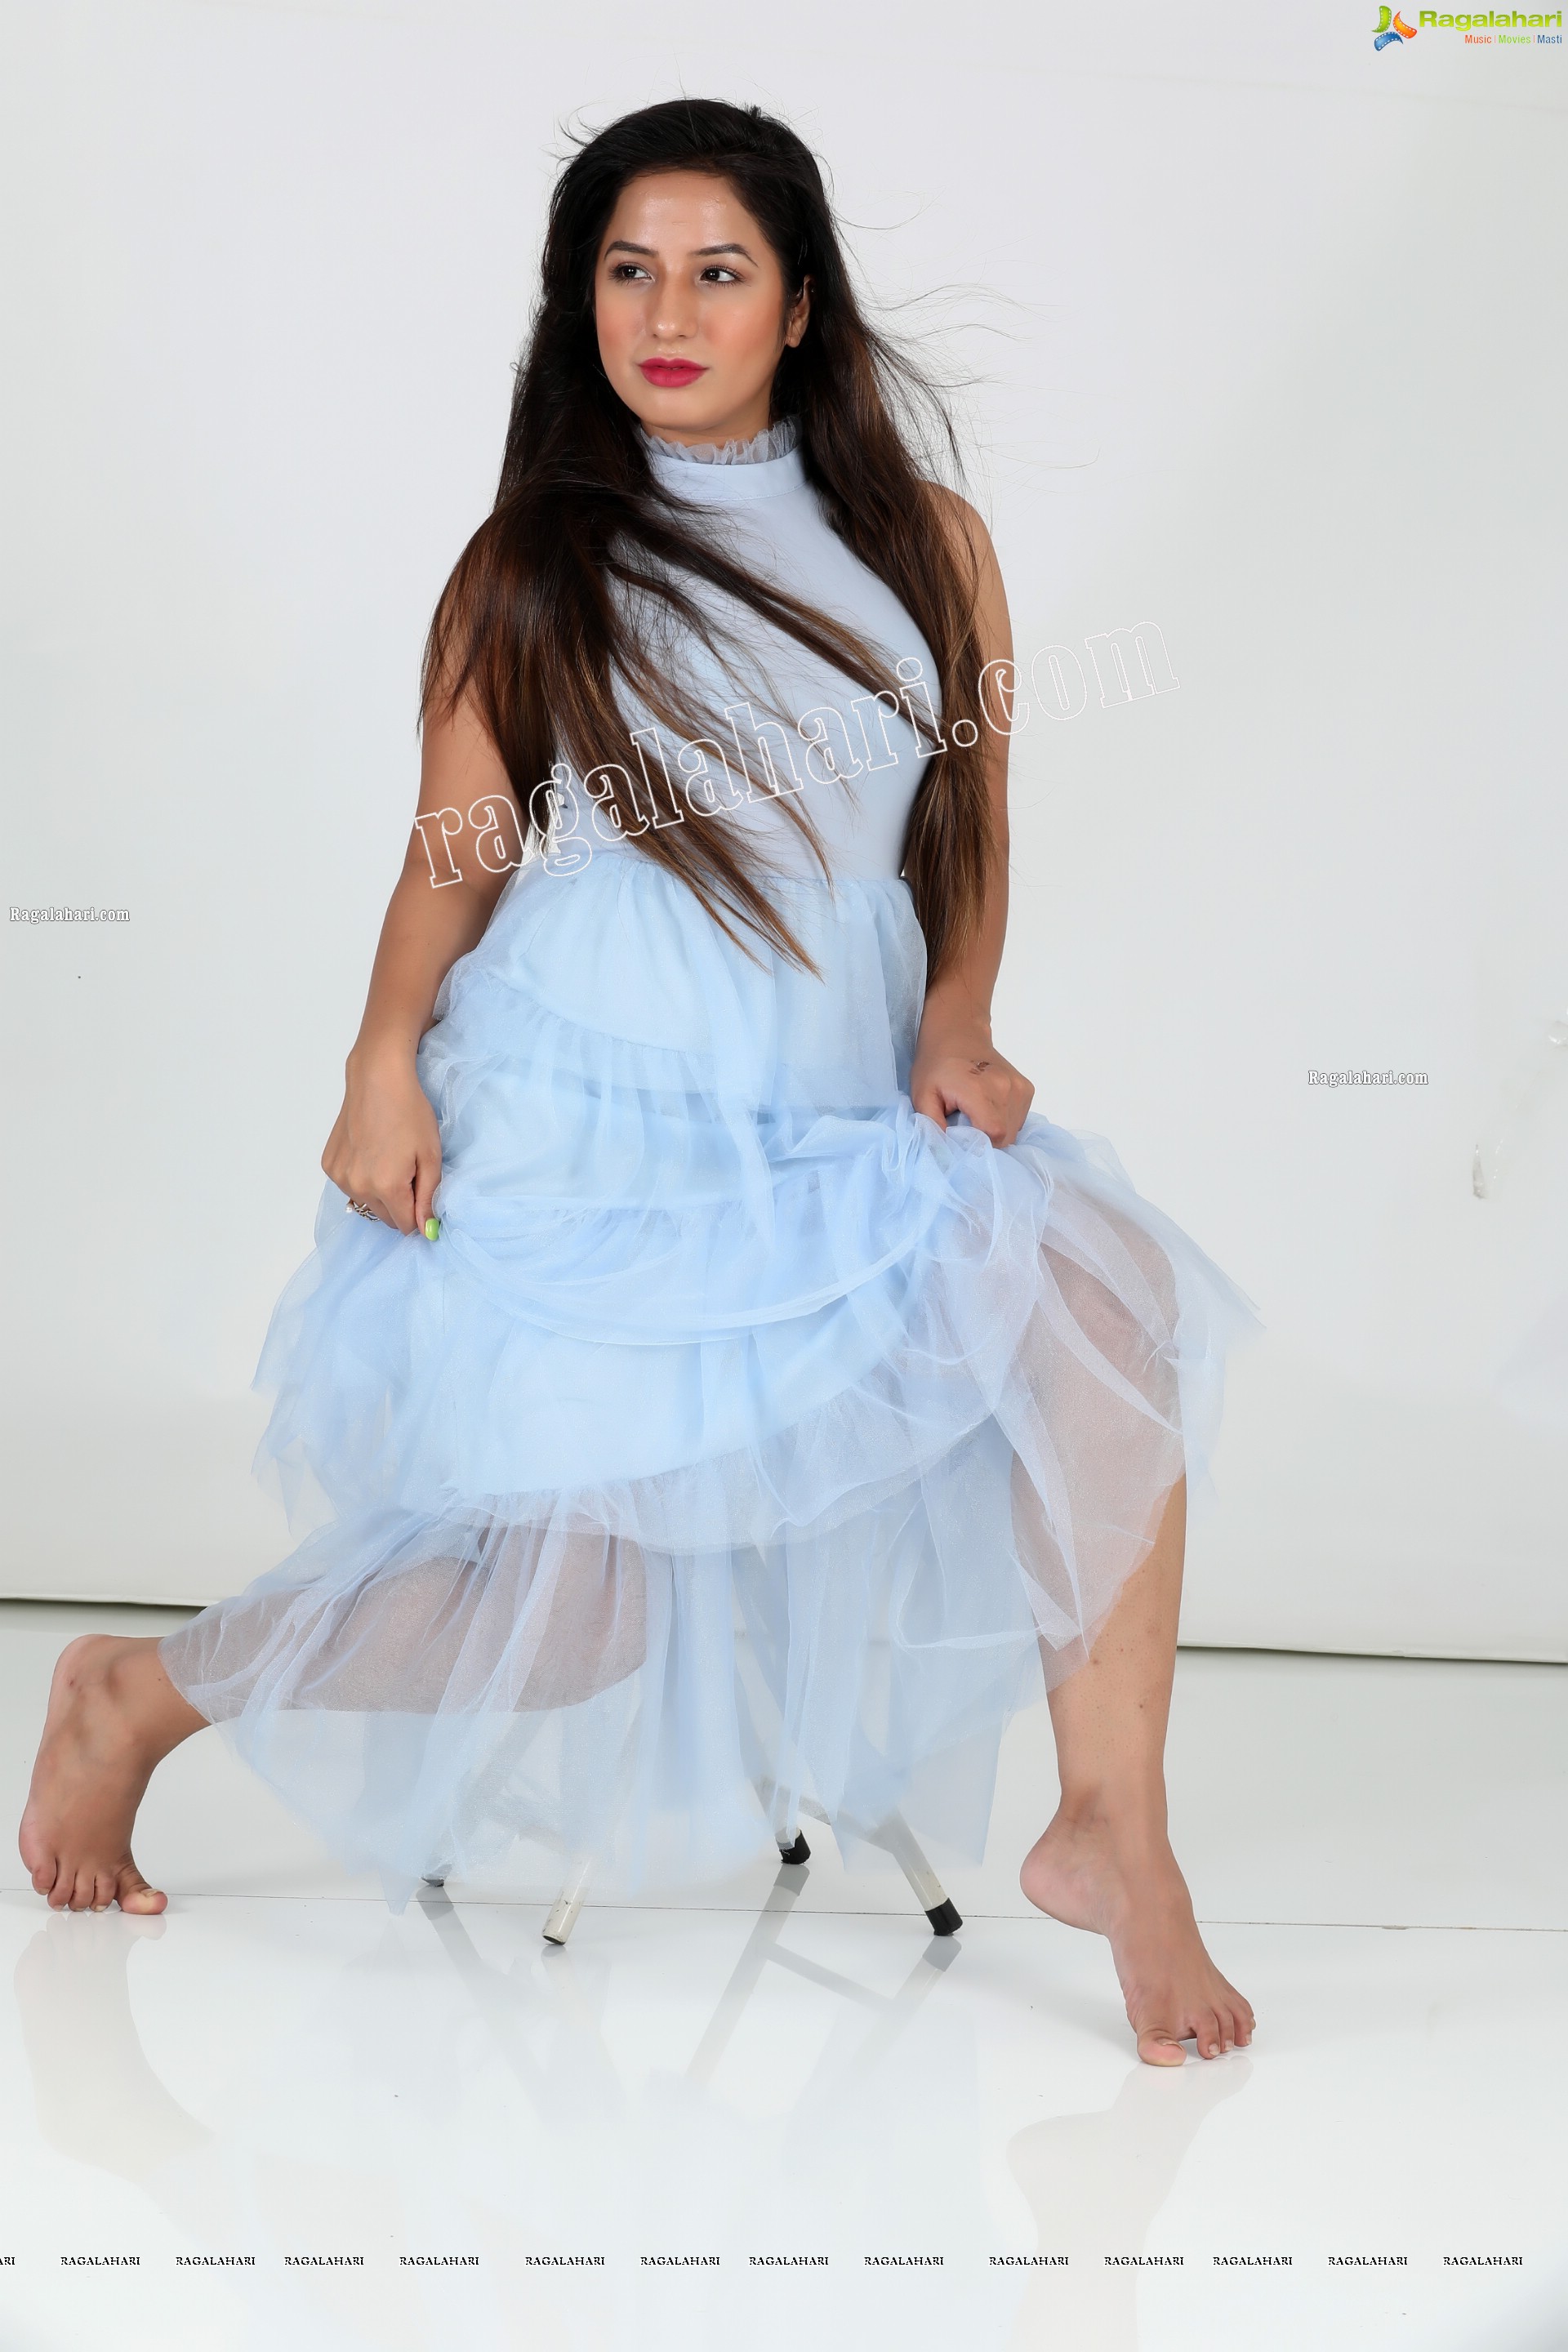 Shunaya Solanki in Sky Blue Layered Dress Exclusive Photo Shoot